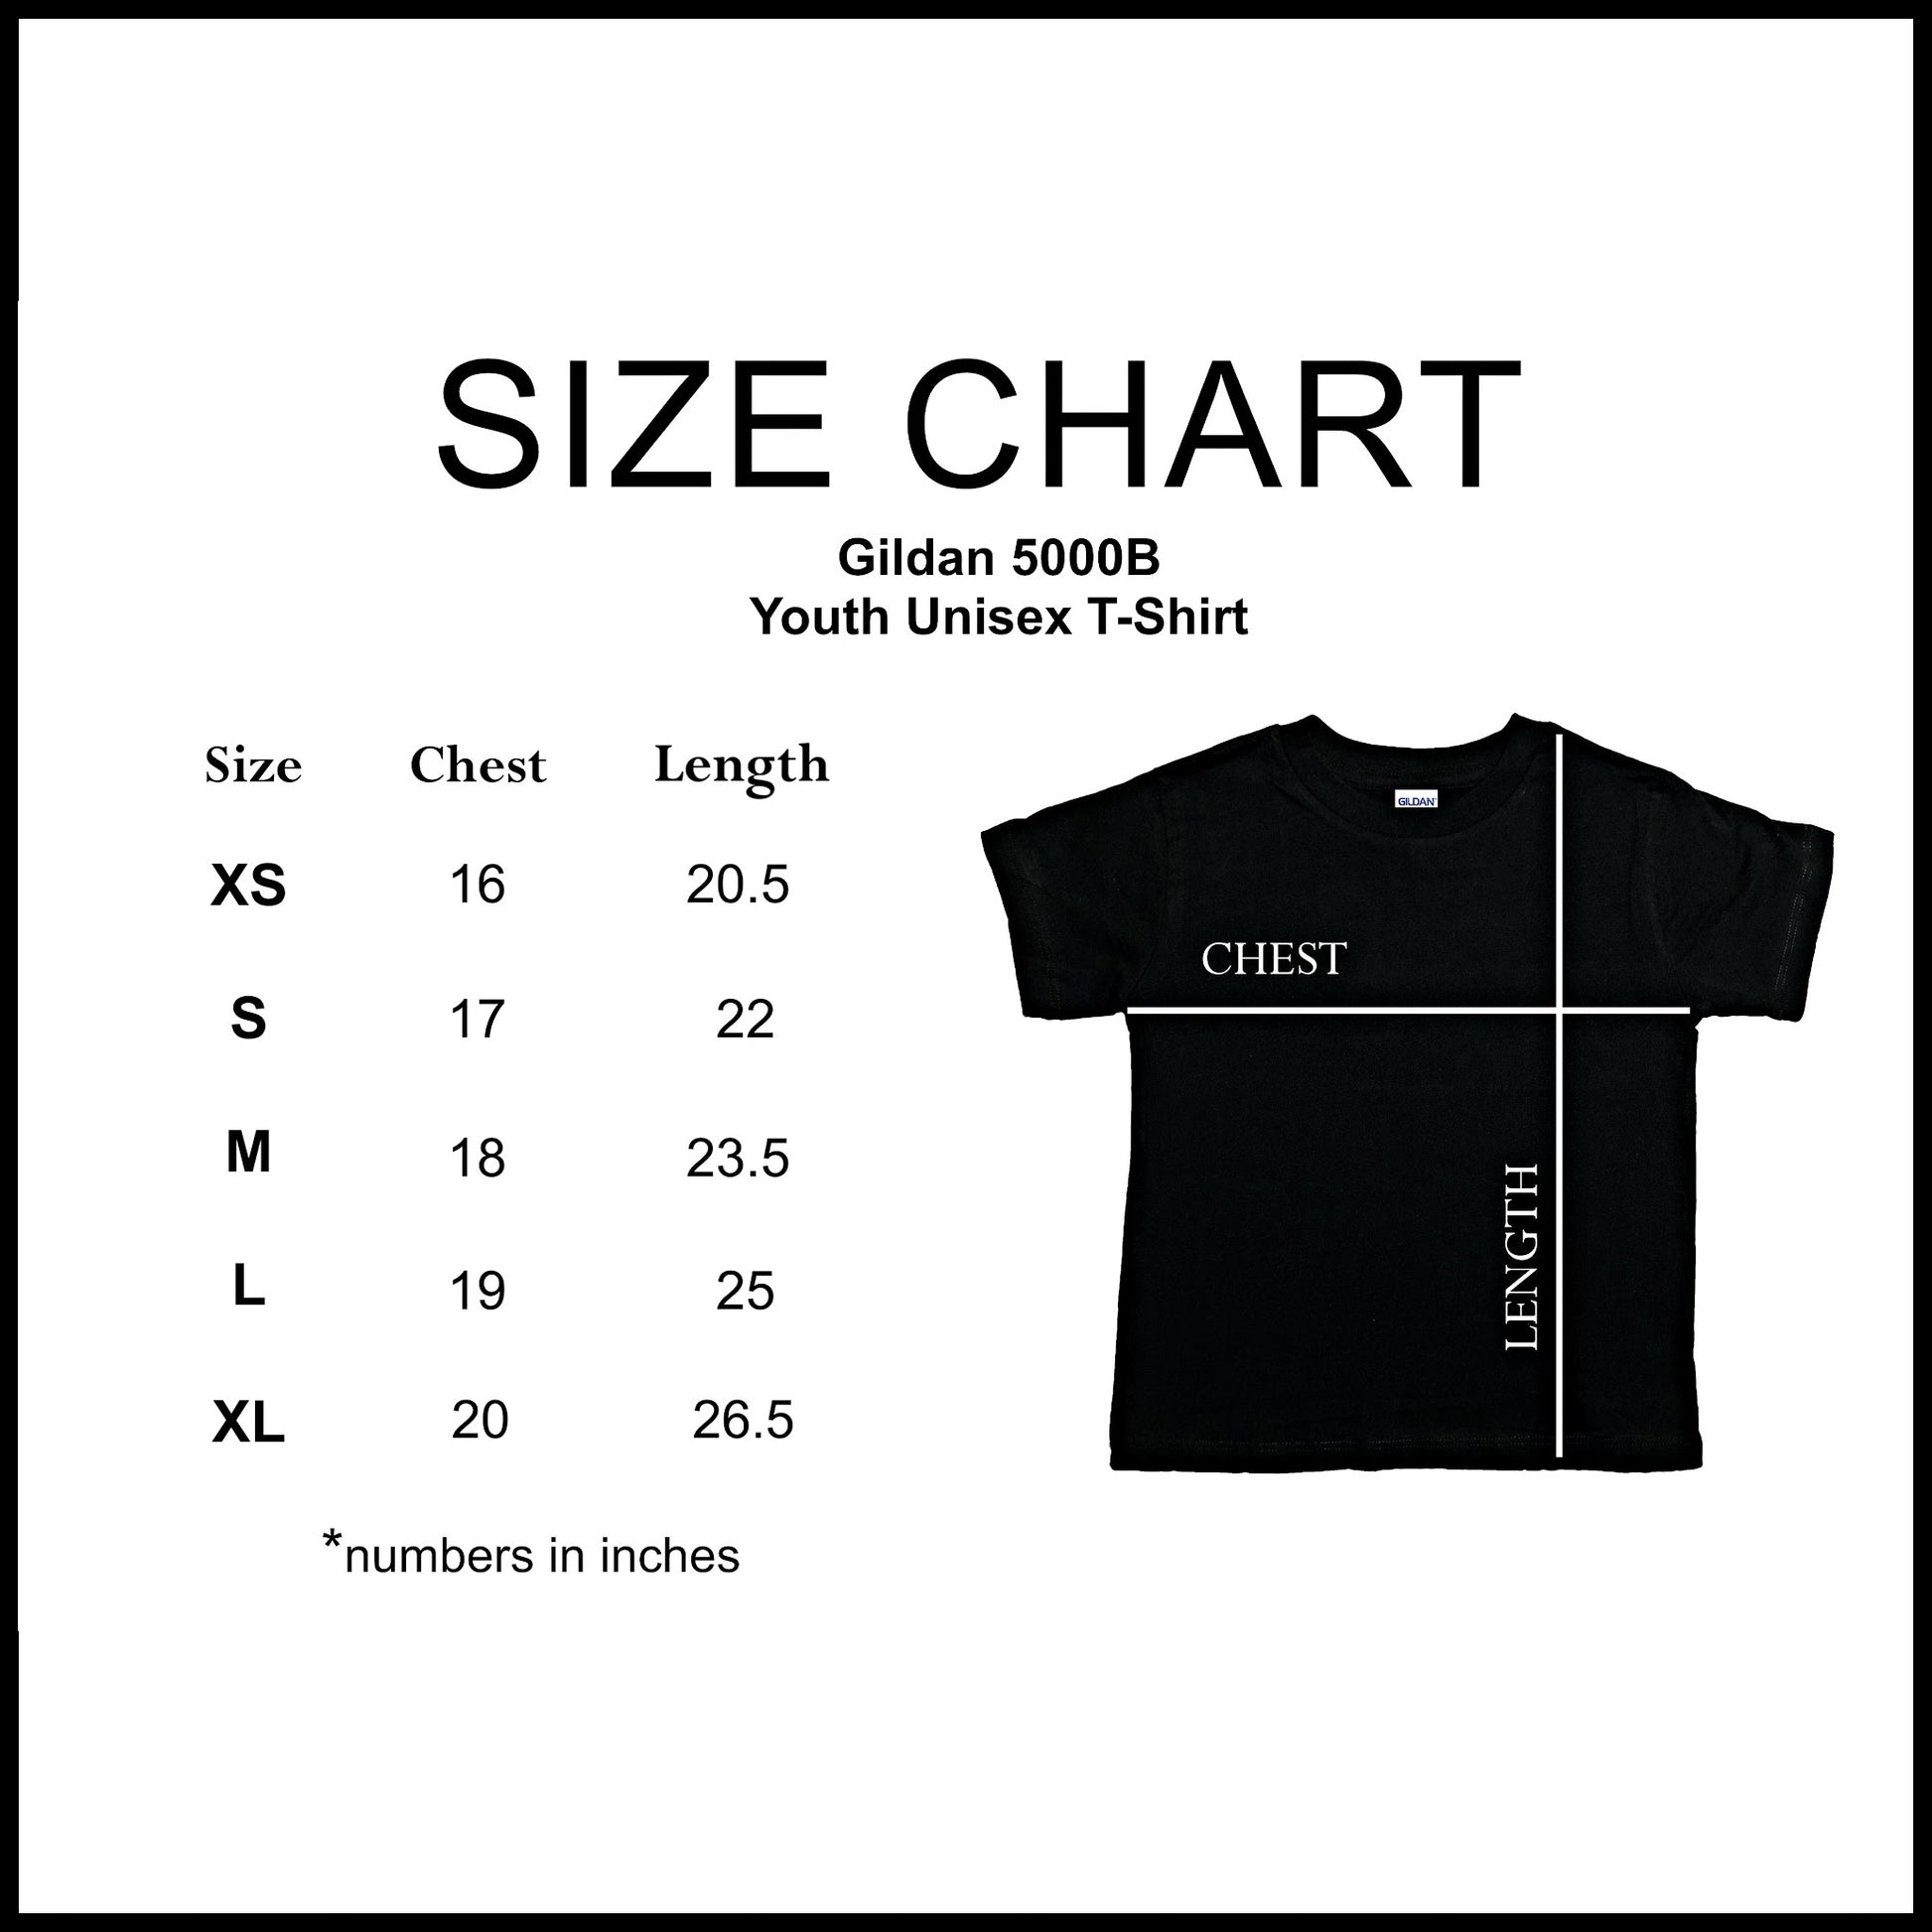 Photo of the Gildan Youth T-shirt size chart